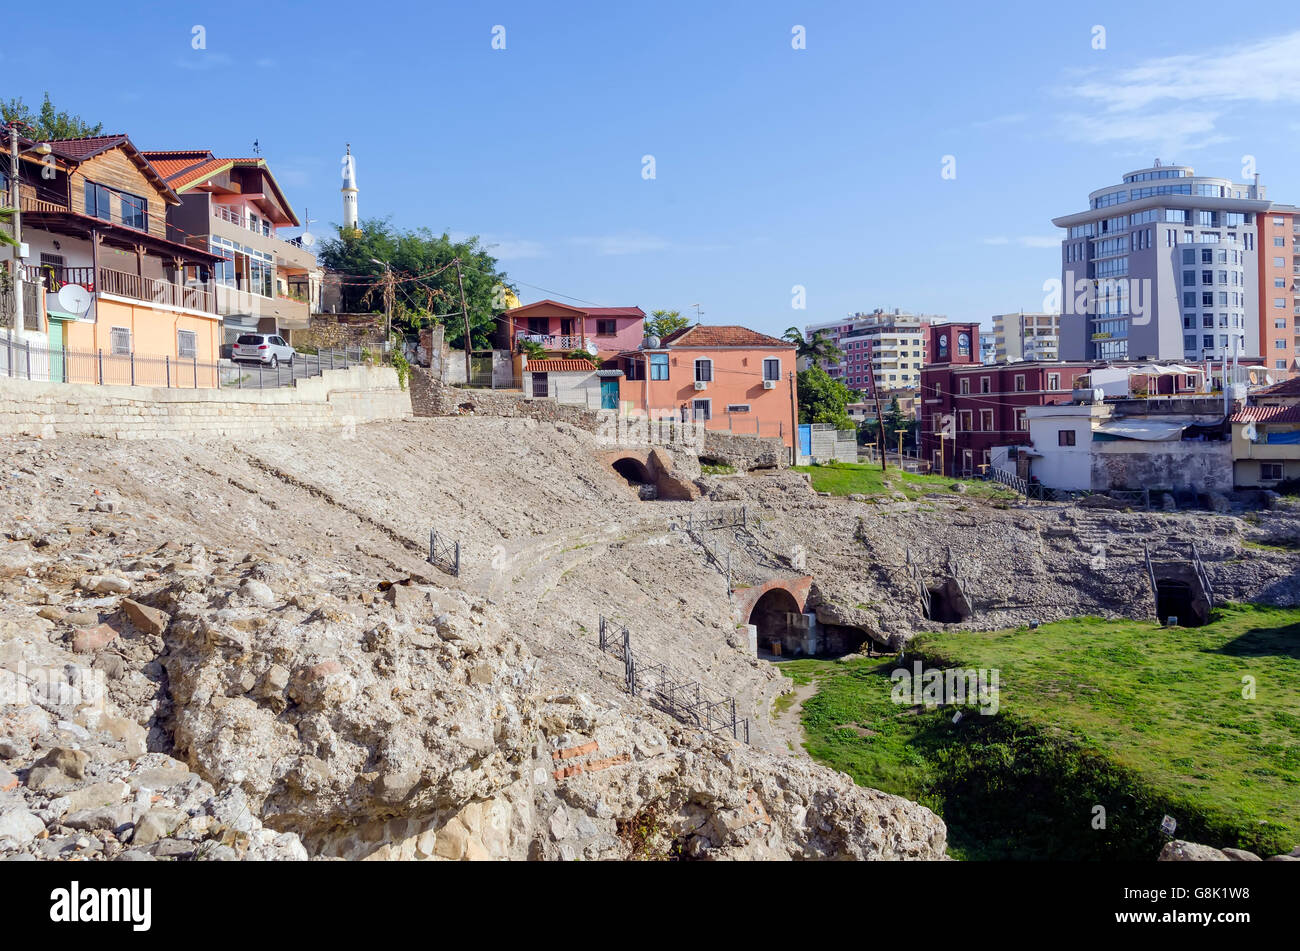 The Roman Amphitheatre of Durres Albania could seat 15,000 to 20,000. Stock Photo